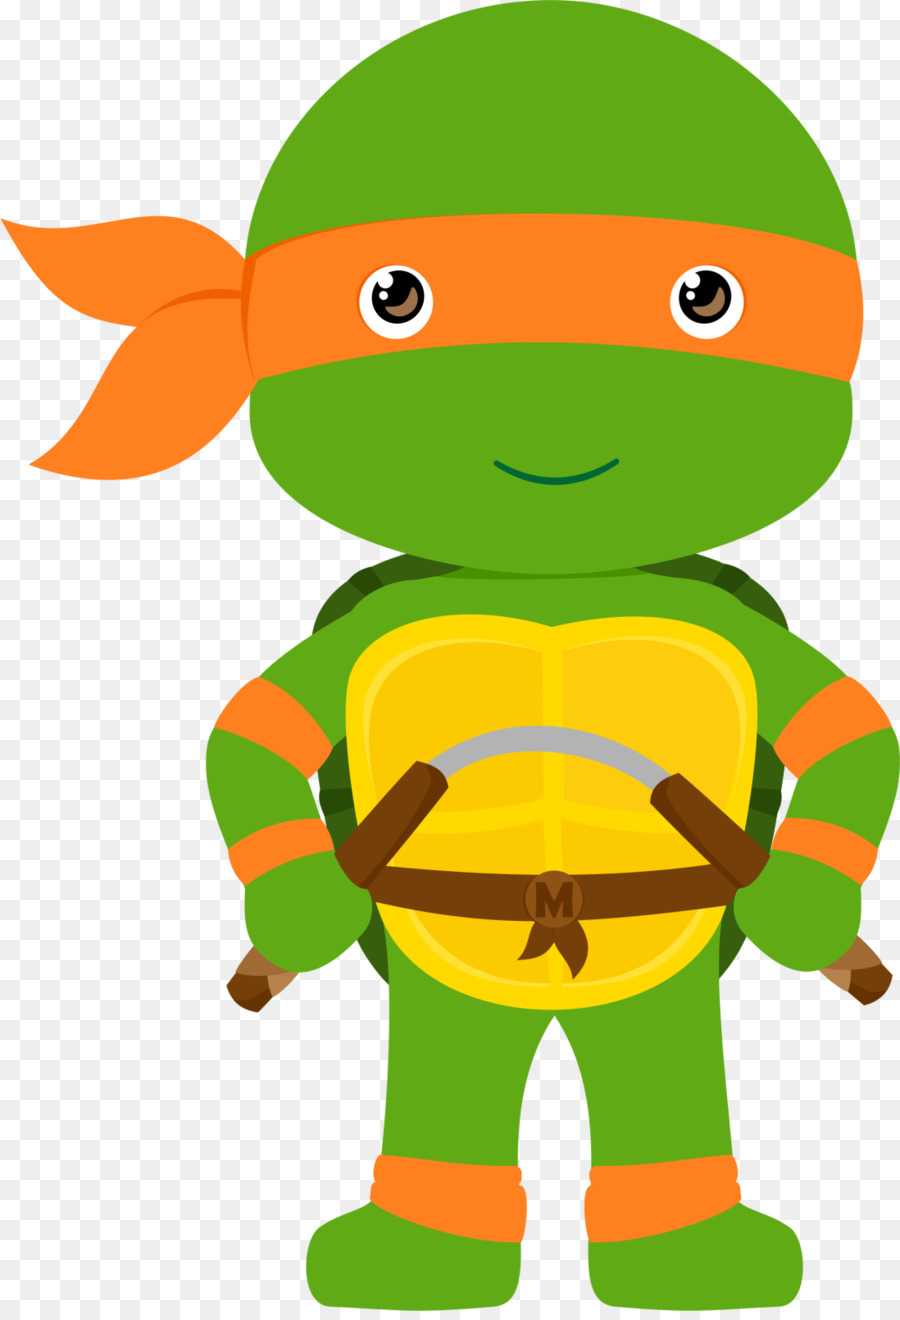 Turtle cartoon clipart.